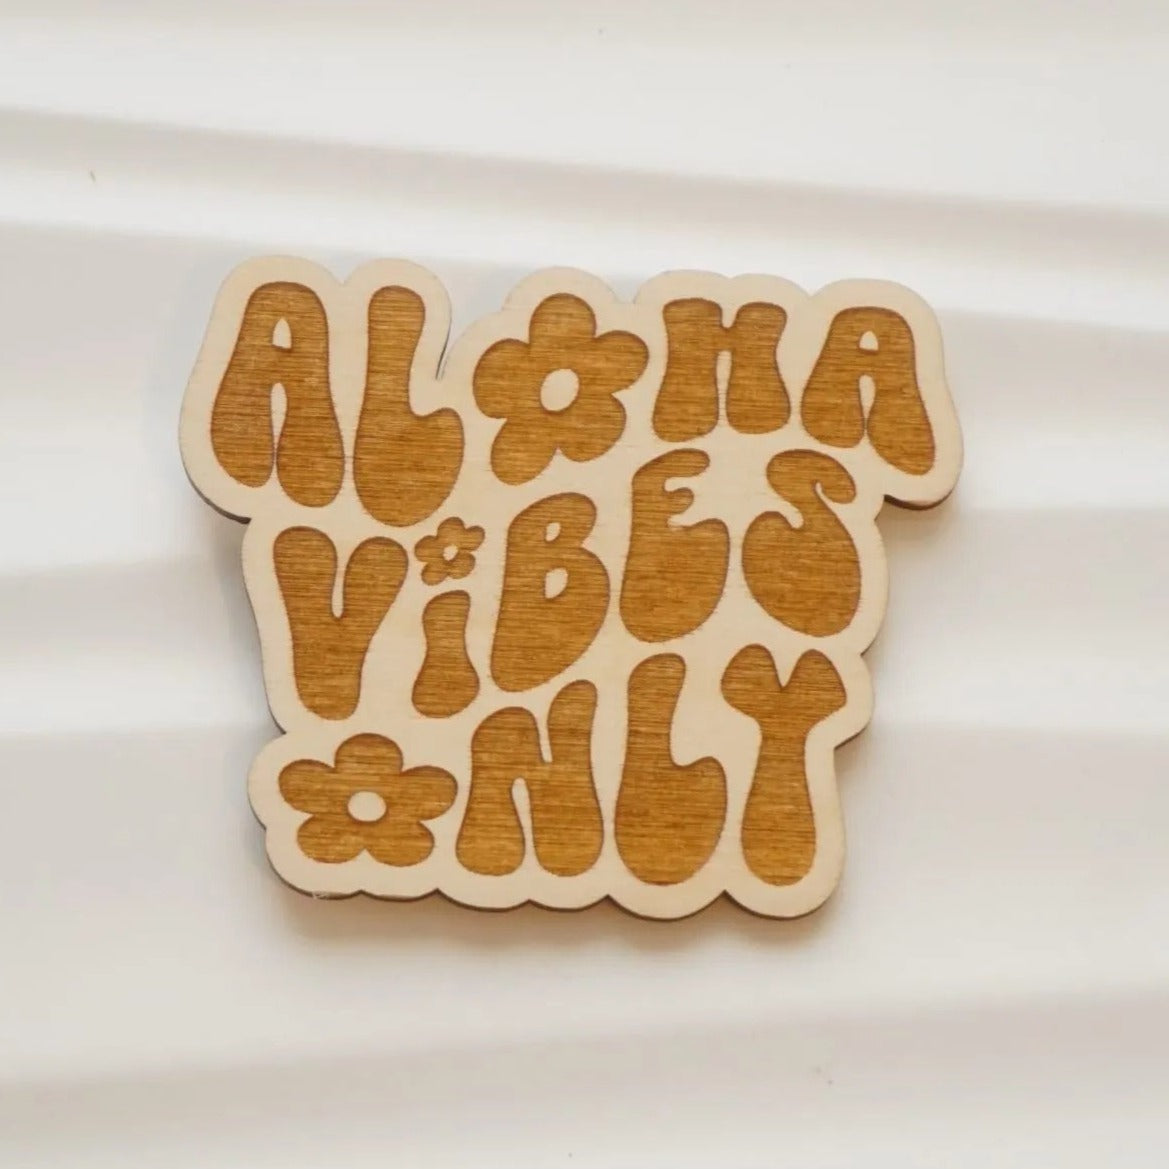 Pop-Up Mākeke - HI Darling Shop - Aloha Vibes Only Birch Wood Magnet